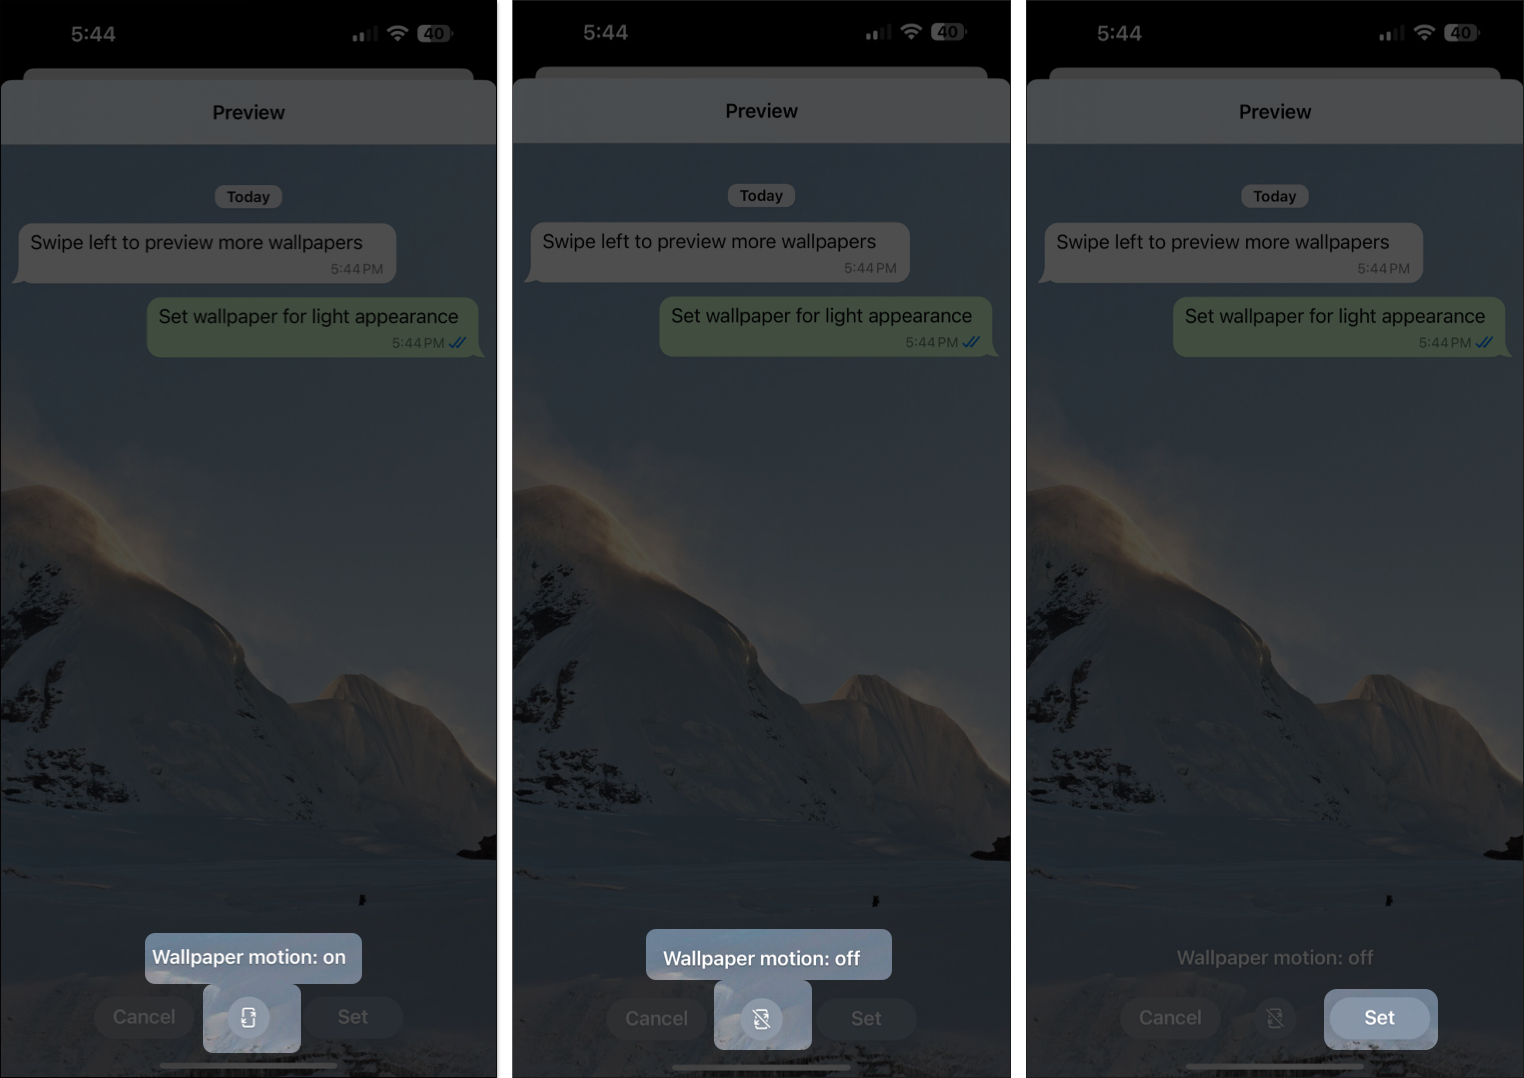 Wallpaper Motion feature preview screen for a WhatsApp wallpaper in iOS WhatsApp app.